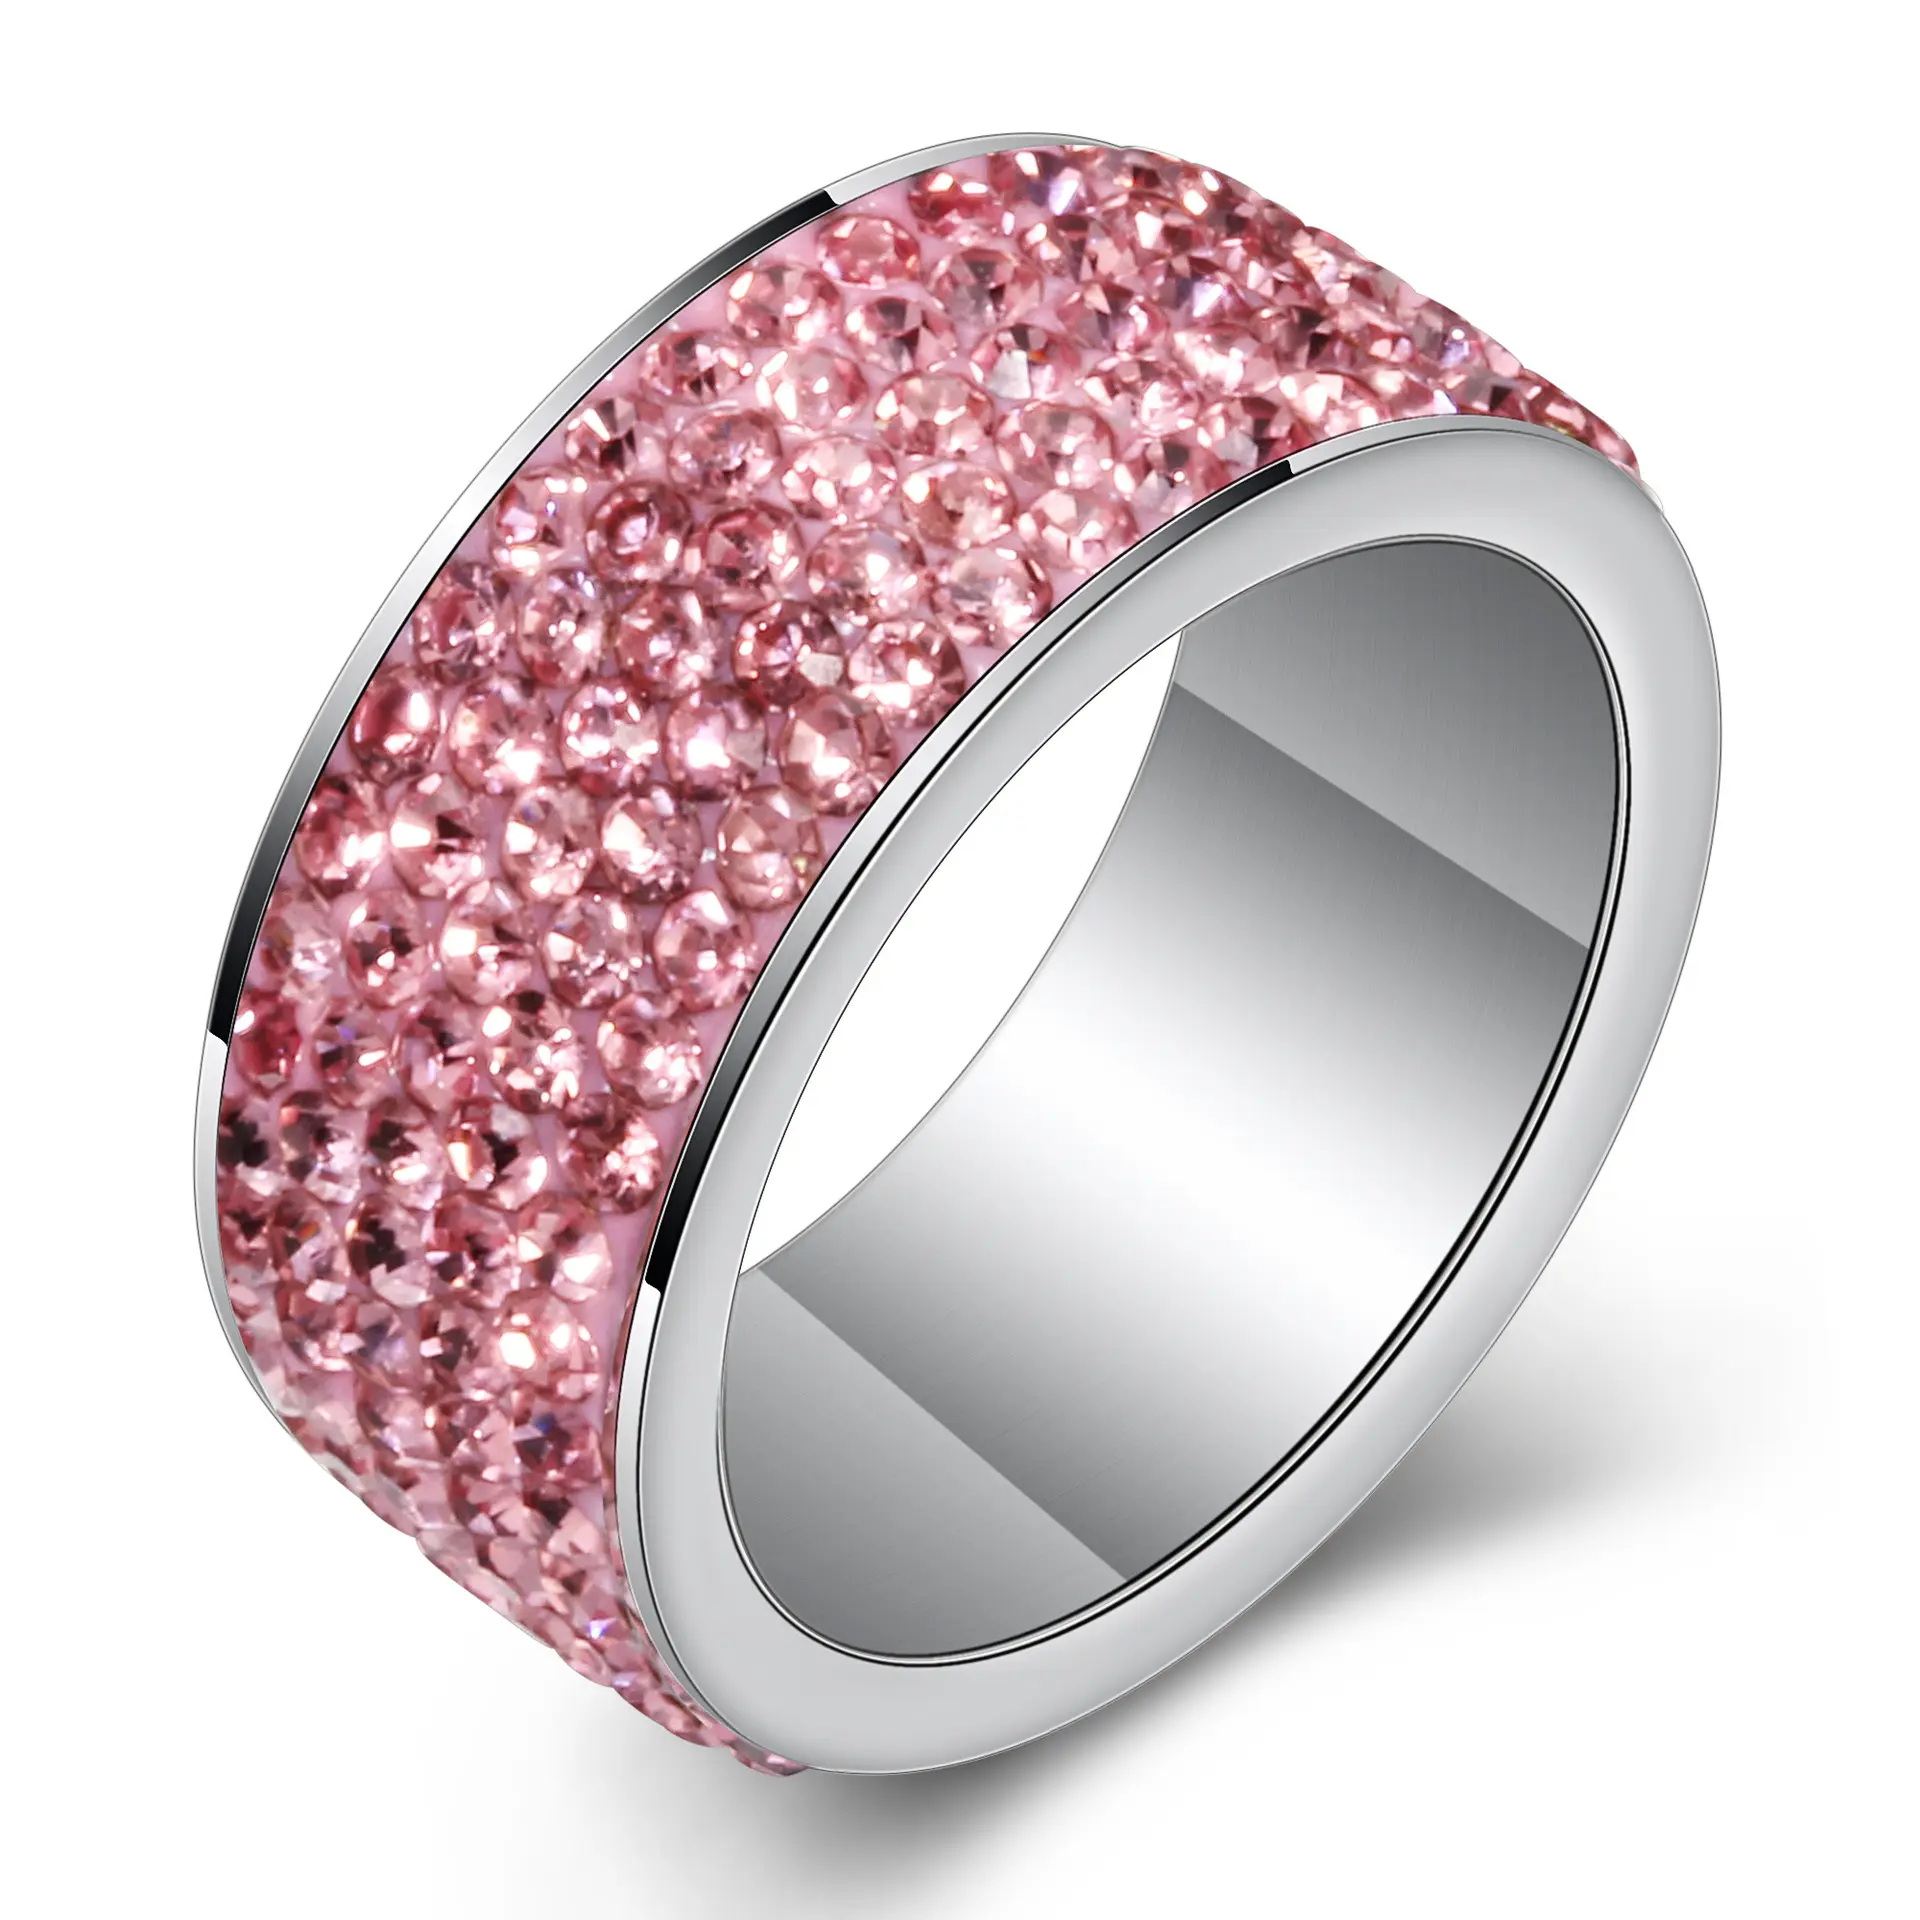 Anillos De Boda 다채로운 5 행 다이아몬드 웨딩 디자인 올리브 그린 핑크 큐빅 지르코니아 반지 스테인레스 스틸 반지